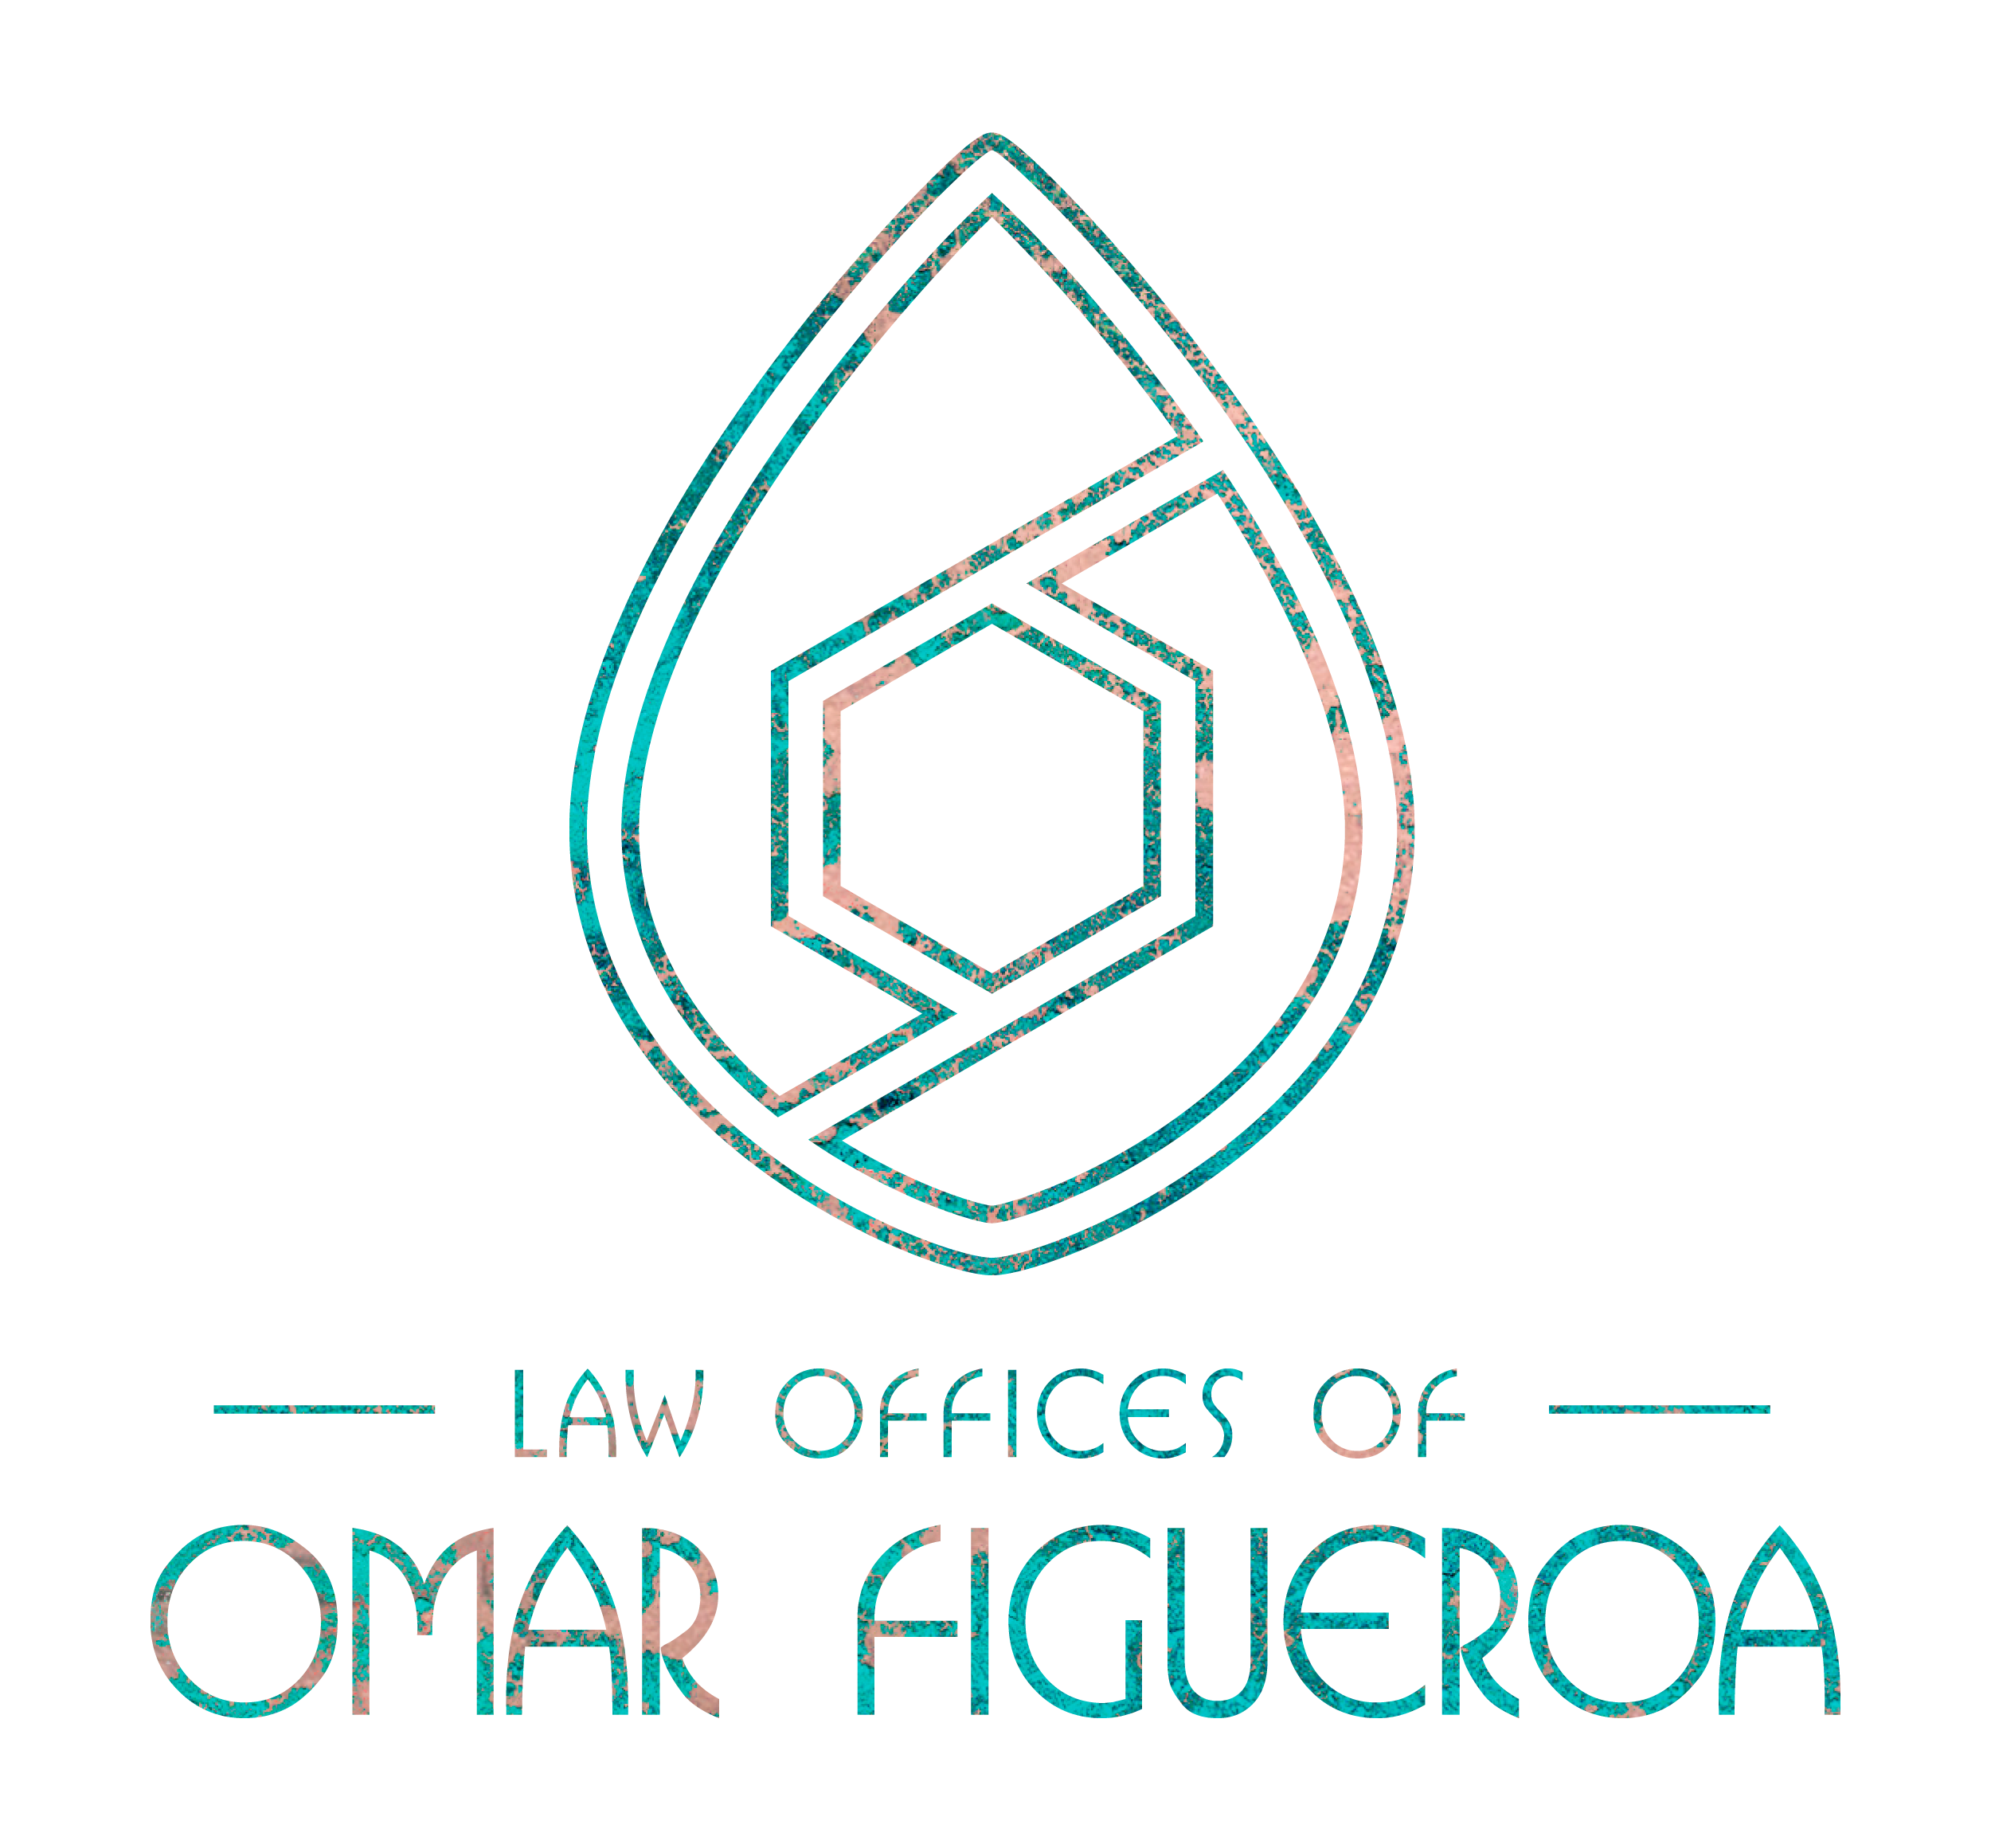 Law Offices of Omar Figueroa, Inc.